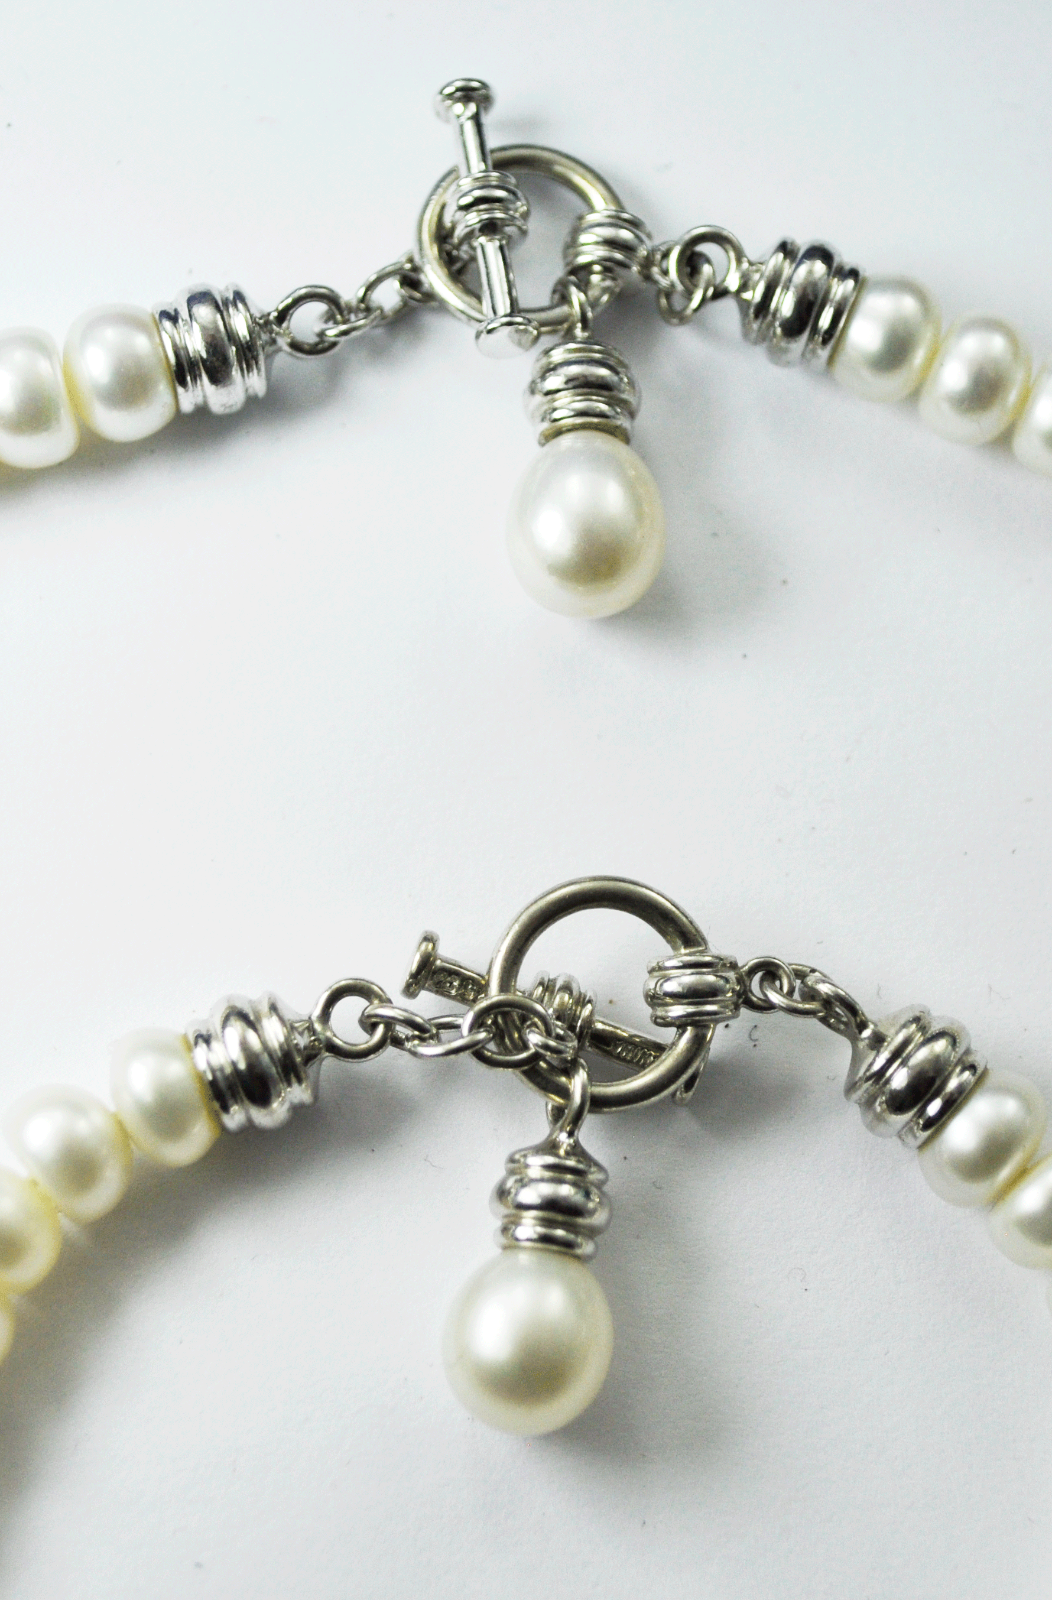 Sterling 7mm FW Pearl Toggle 17" Necklace & 7.5" Bracelet Set Dangle Charm